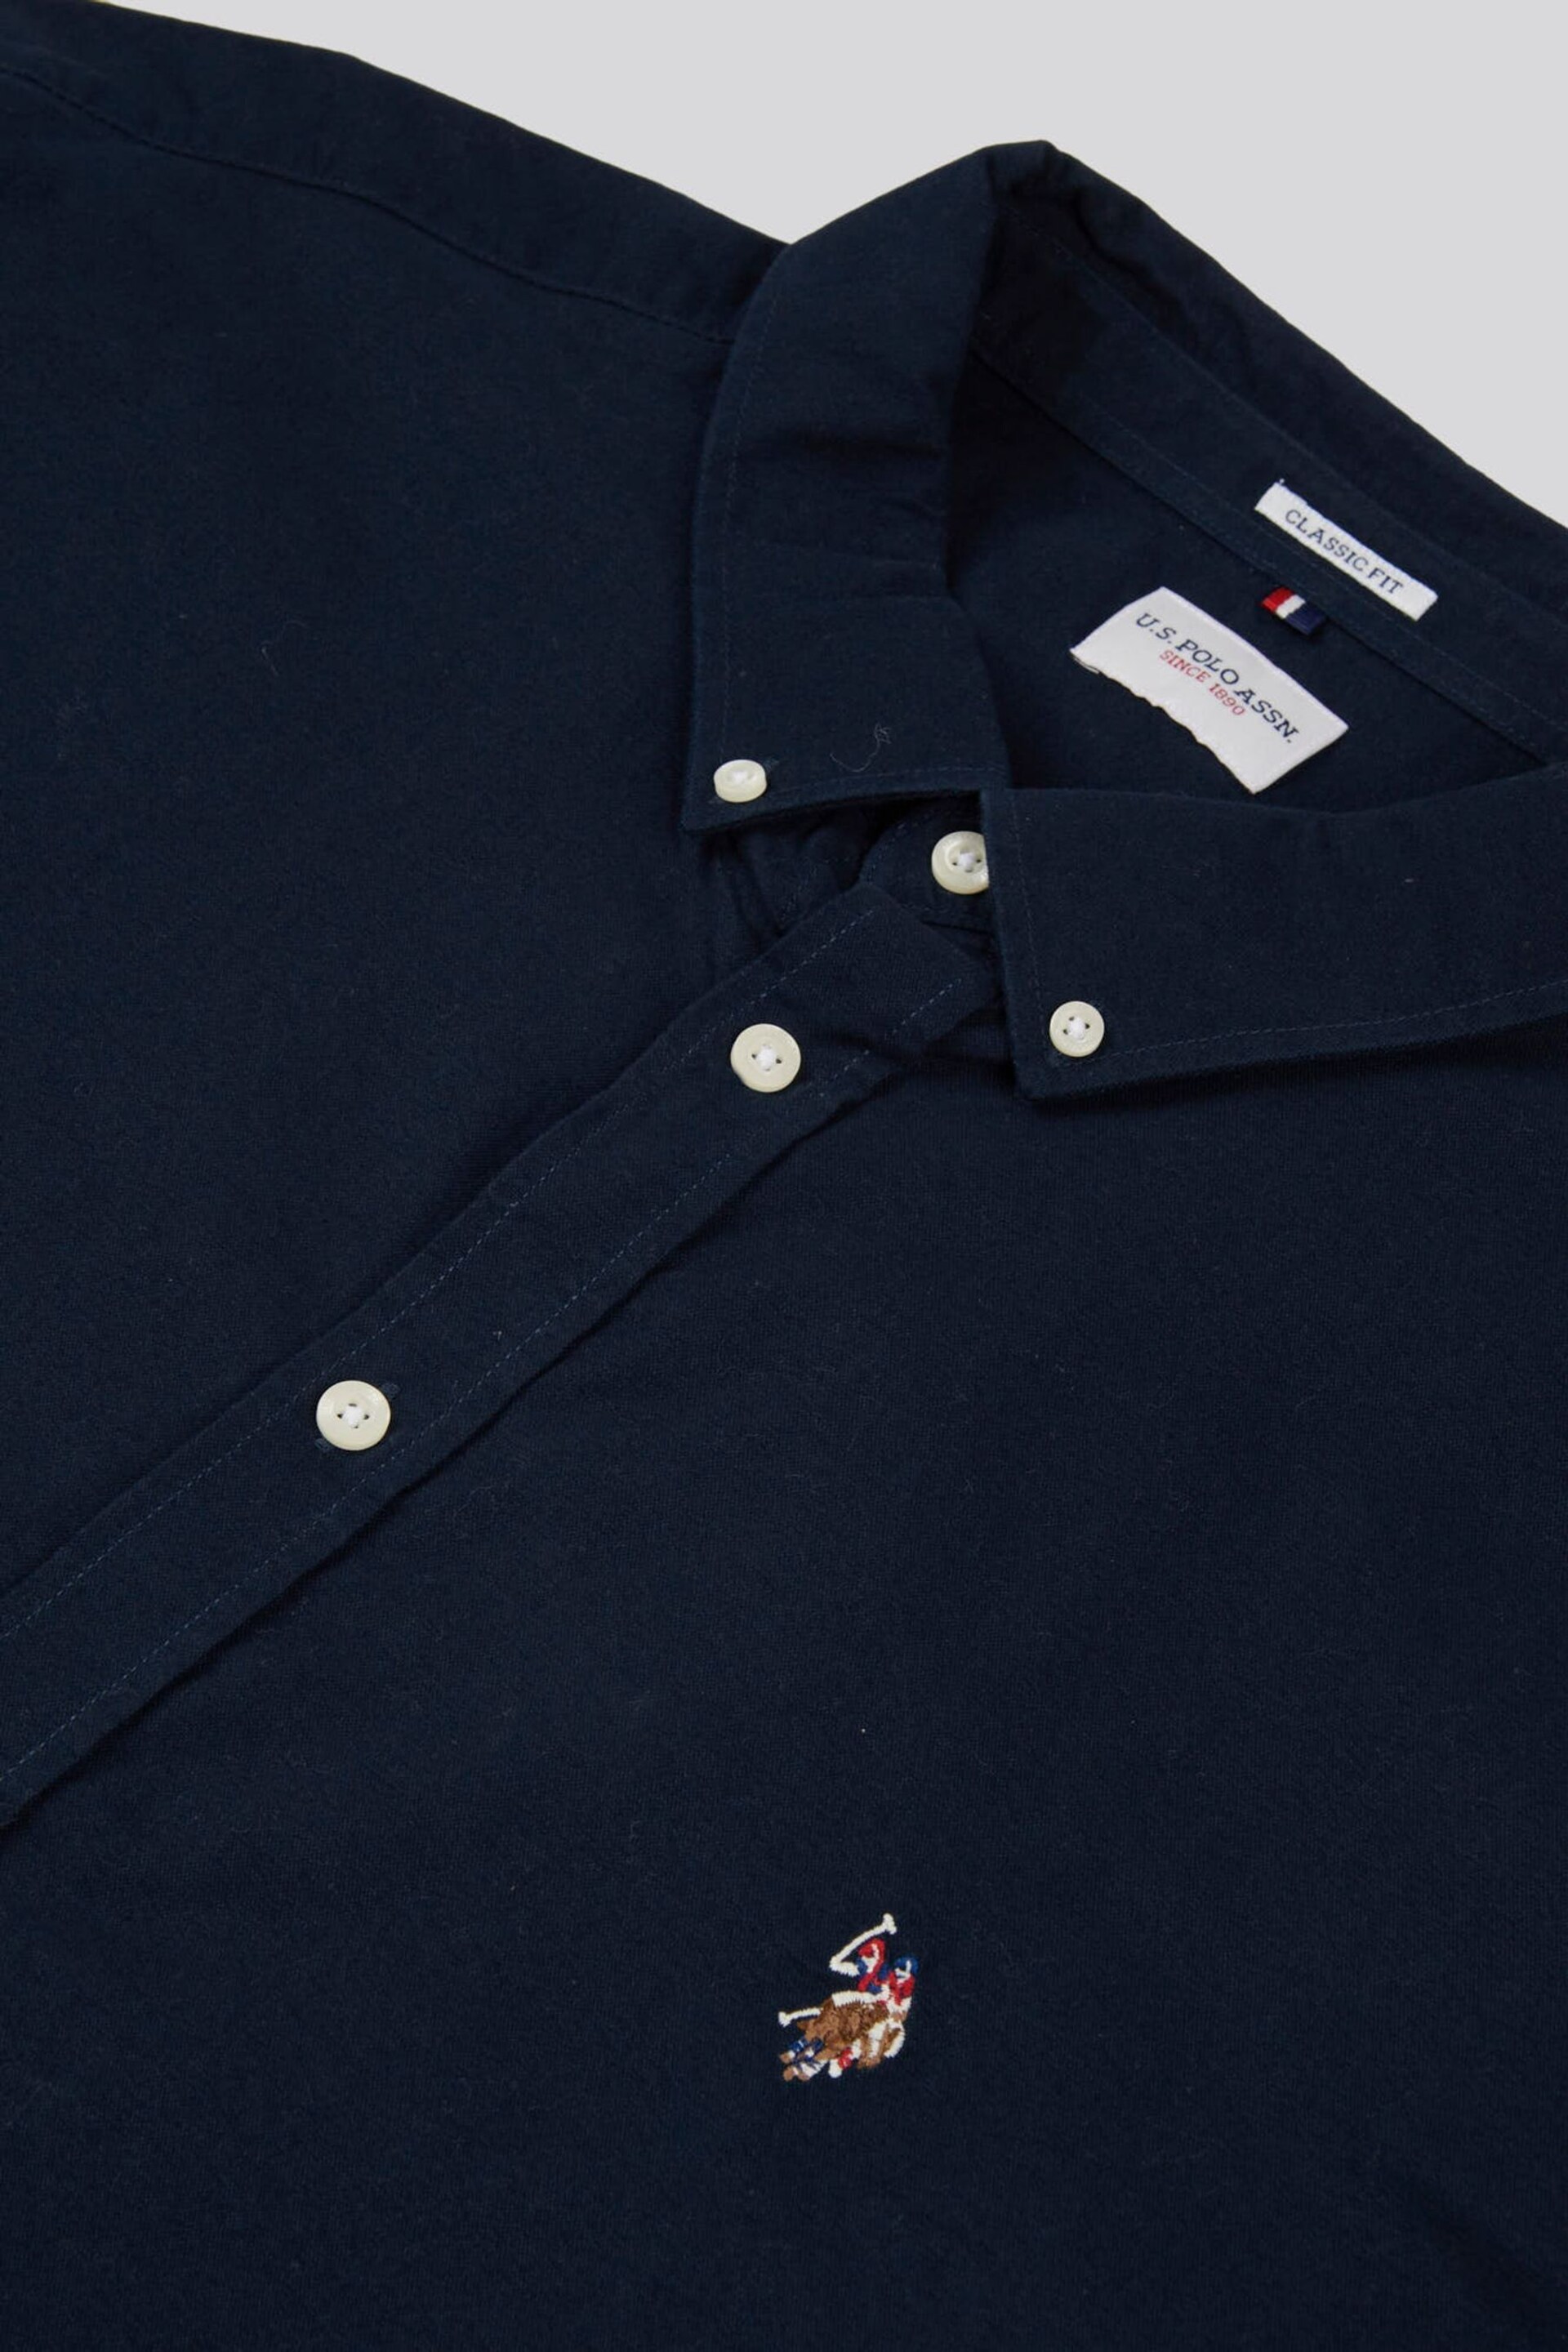 U.S. Polo Assn. Mens Blue Big & Tall Short Sleeve Oxford Shirt - Image 7 of 7